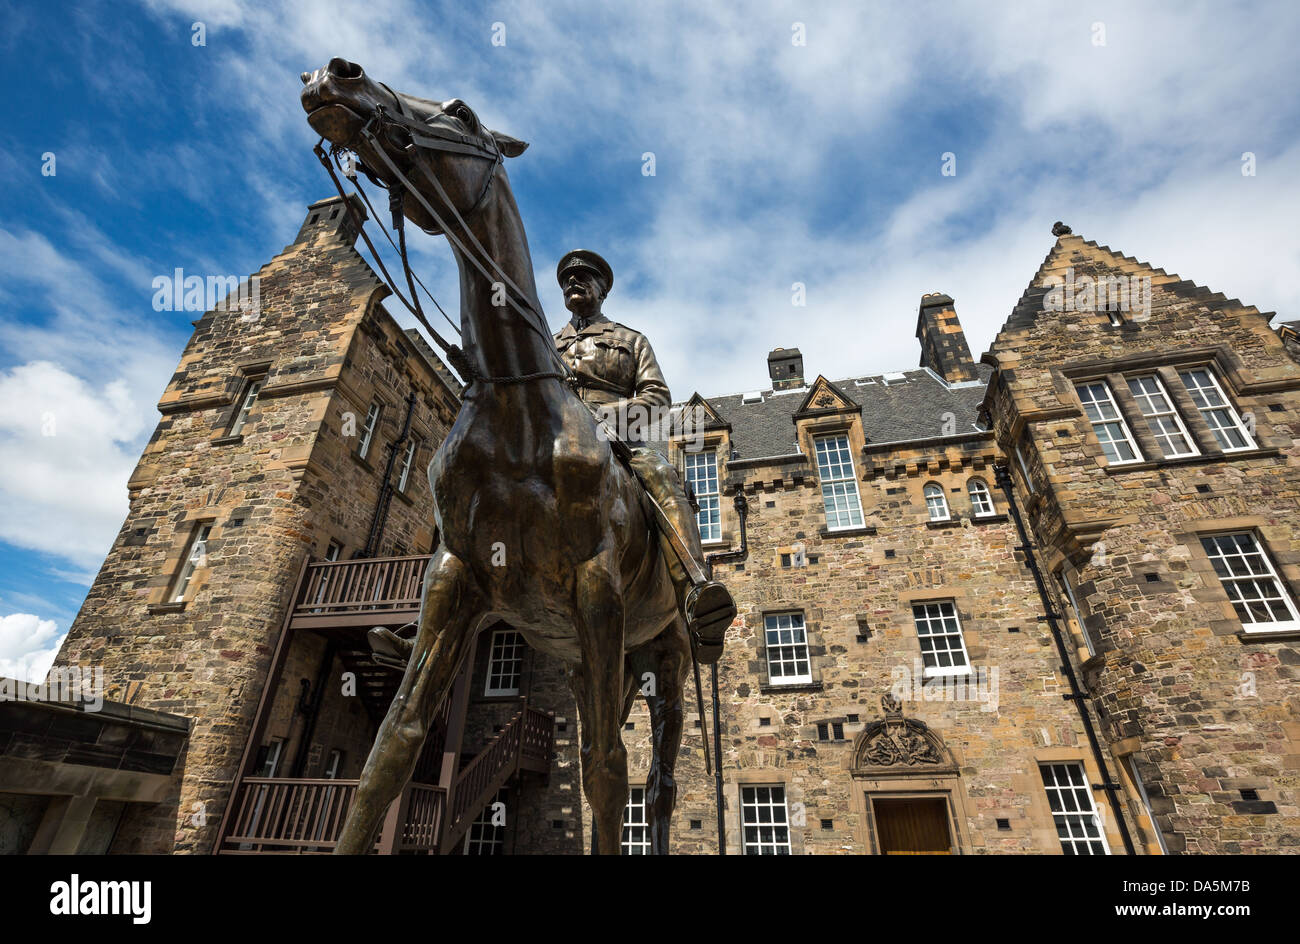 Europe Great Britain, Scotland, Edinburgh, the equestrian statue of the Field Marshal Earl Haig in the Edinburgh castle. Stock Photo